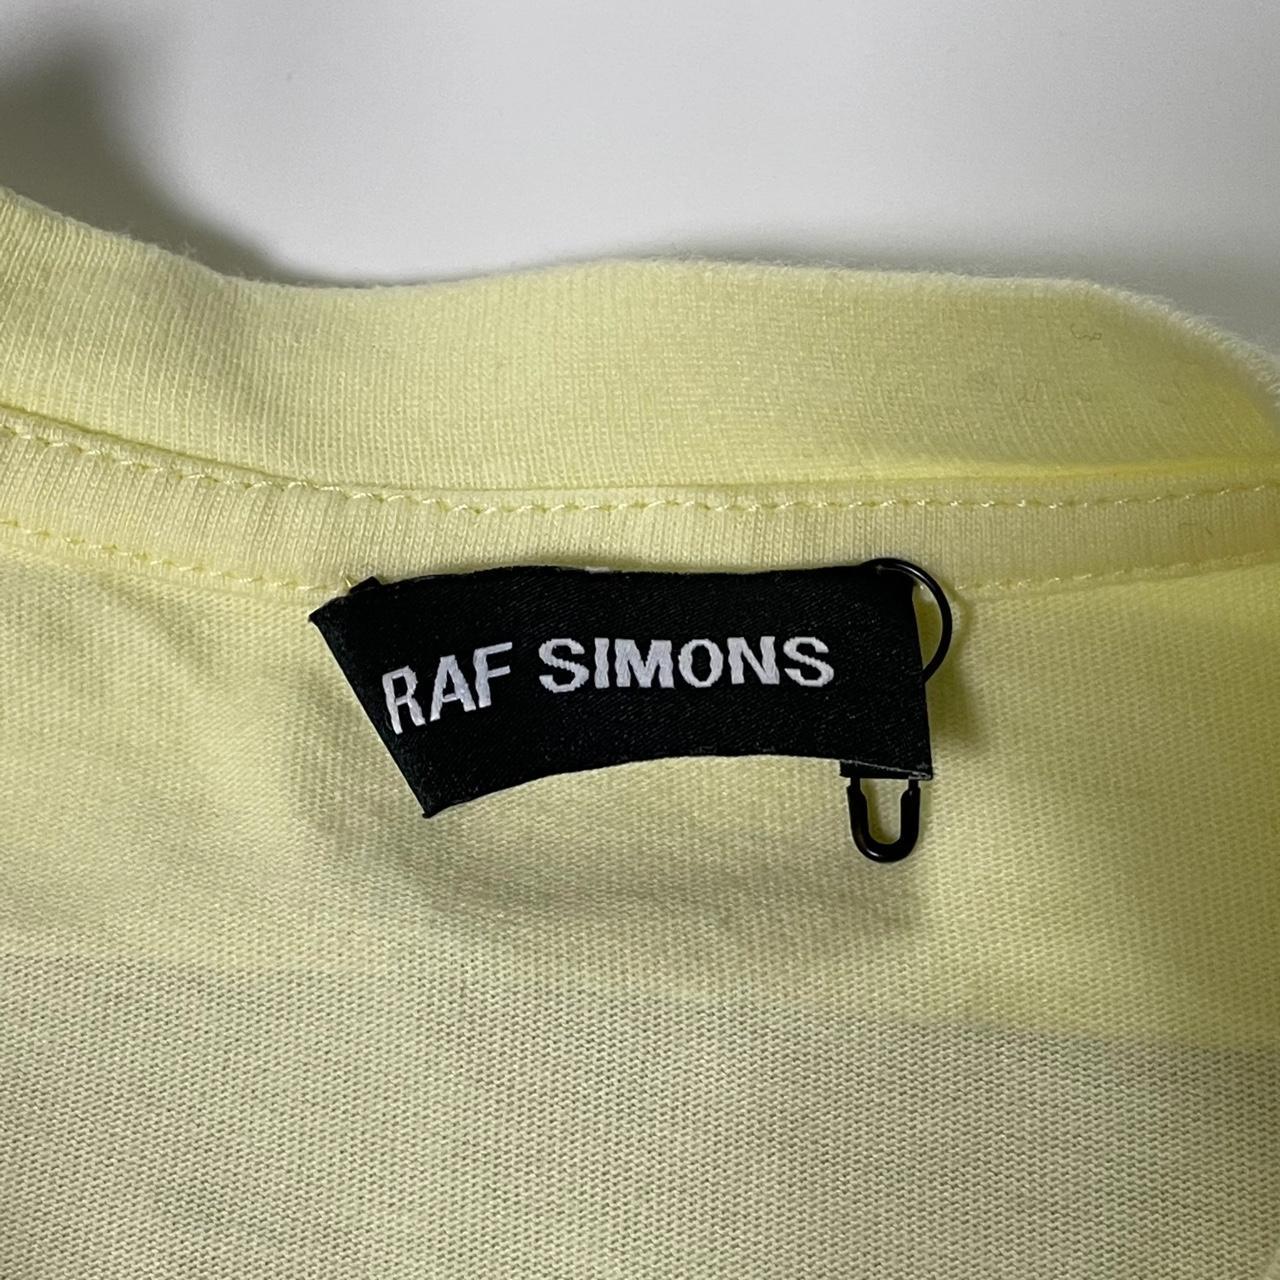 Raf Simons Women's Yellow and Black T-shirt (4)